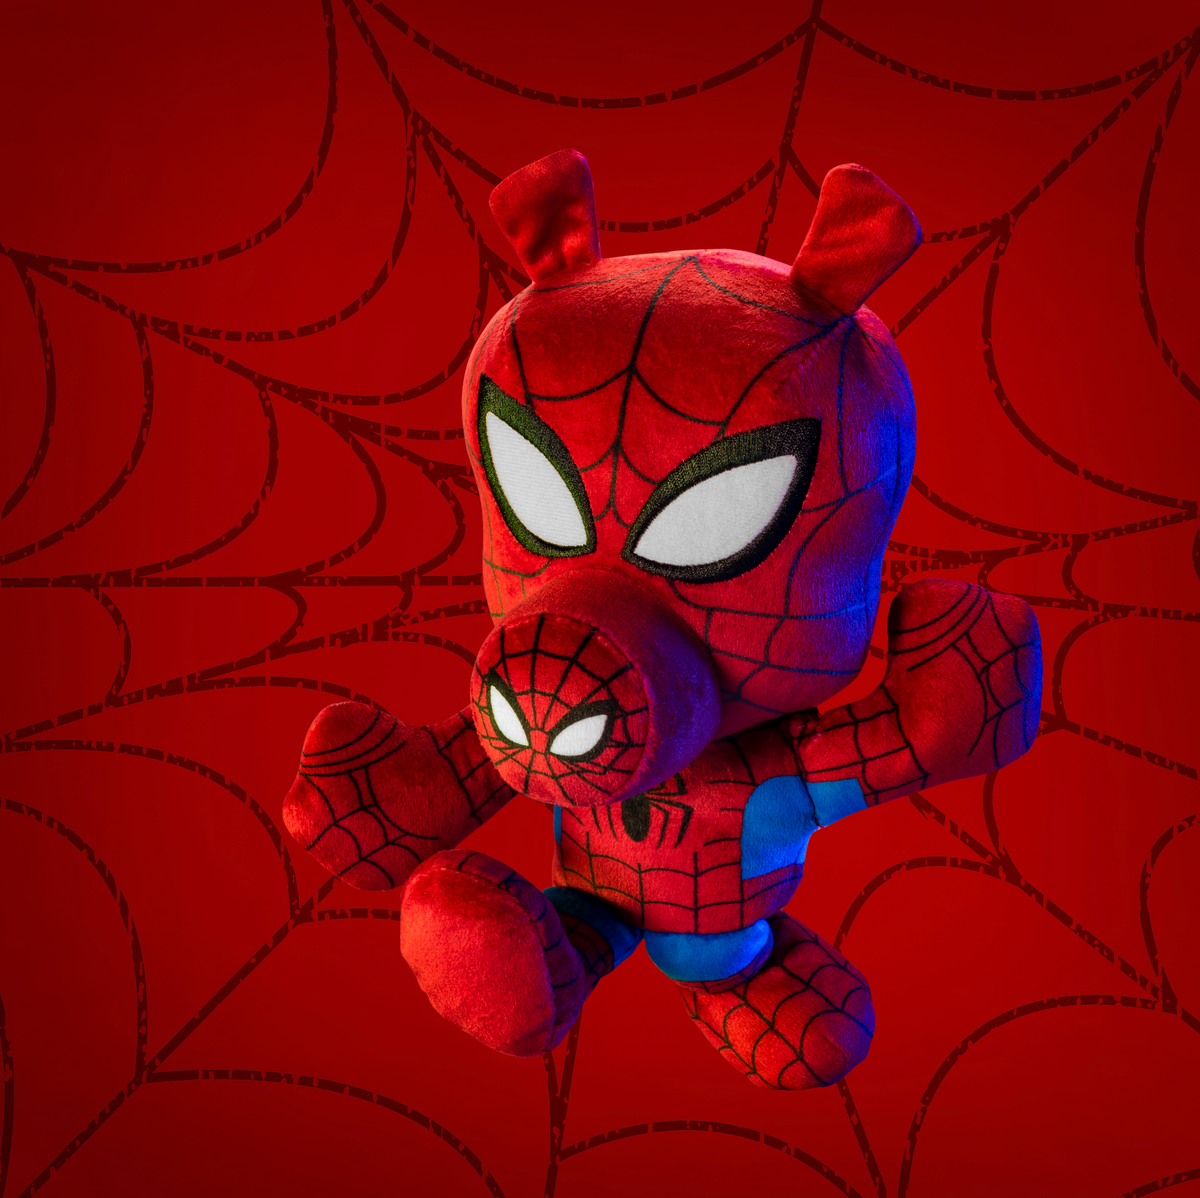 Marvel Spider-Ham 8&quot; Kuricha Plush